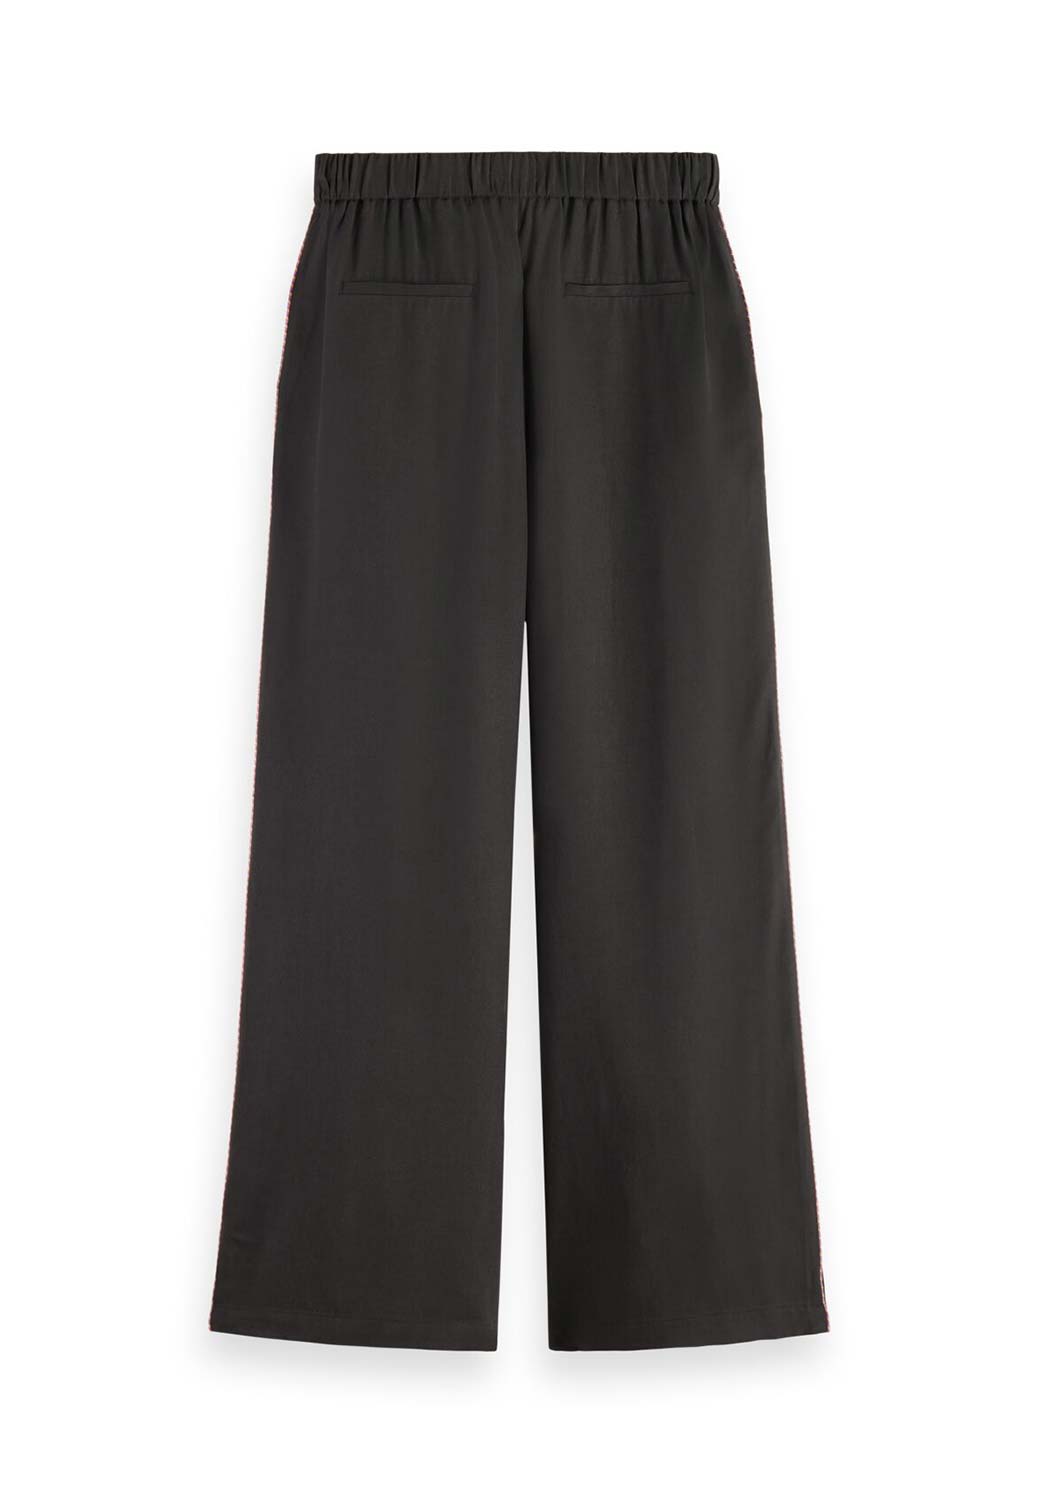 Dark Slate Gray מכנסיים ארוכים לנשים Eleni SCOTCH & SODA